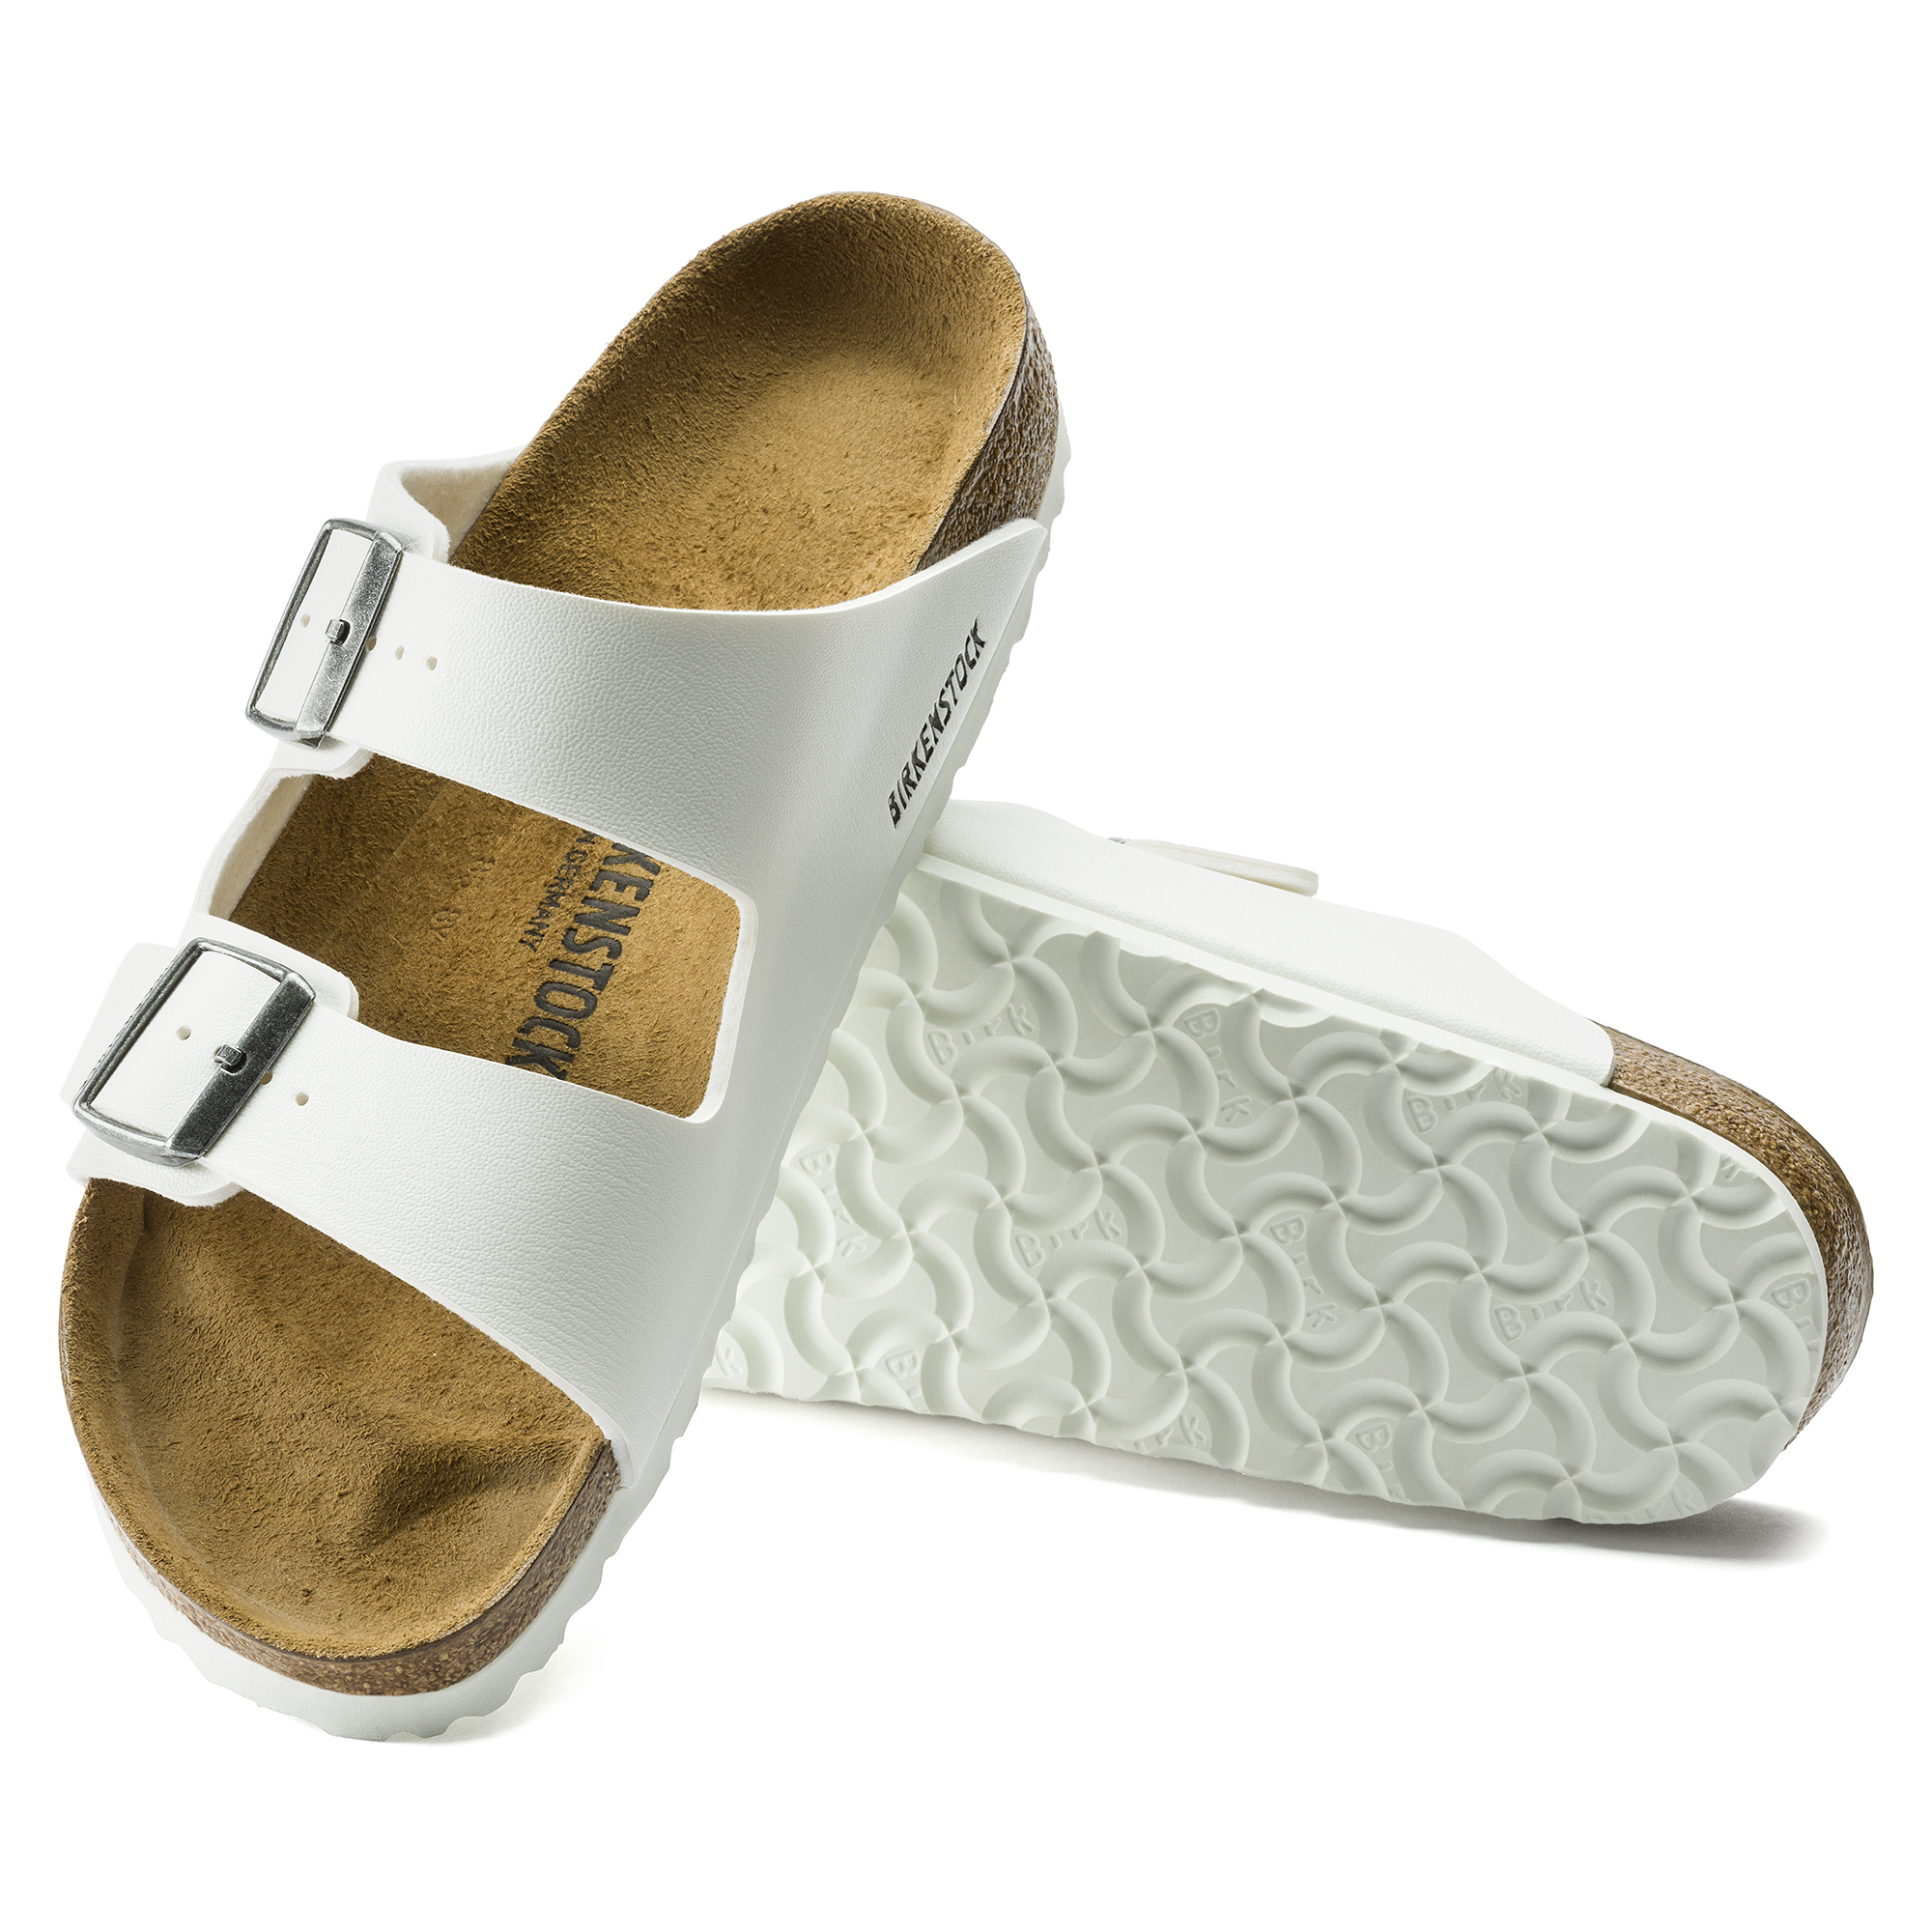 birkenstocks with white soles